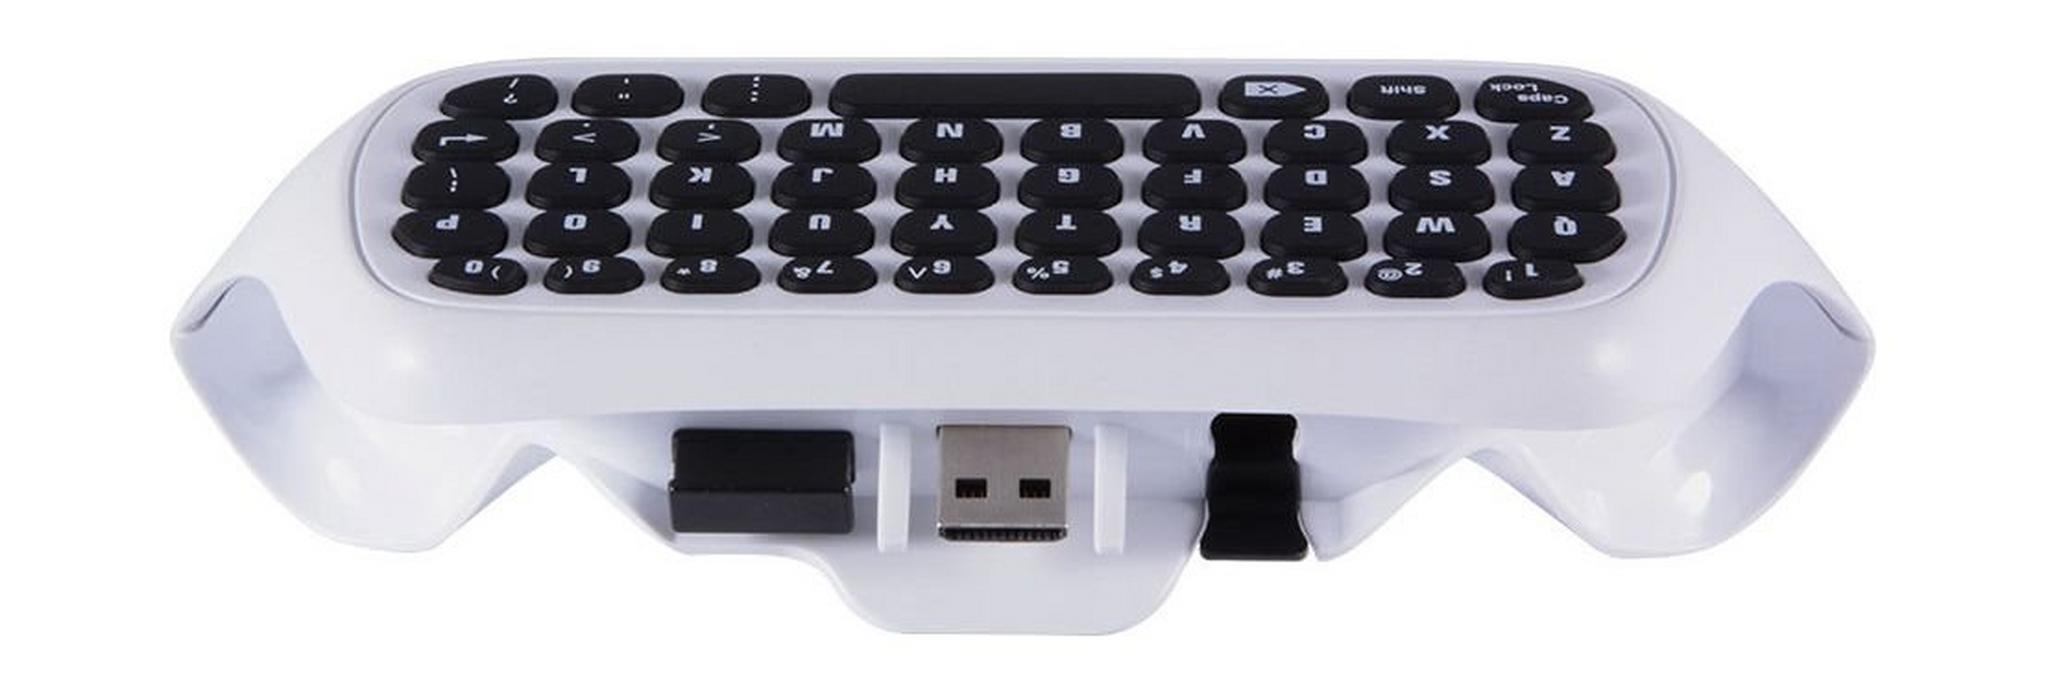 Wireless Mini Xbox One Controller Keyboard Chatpad - White